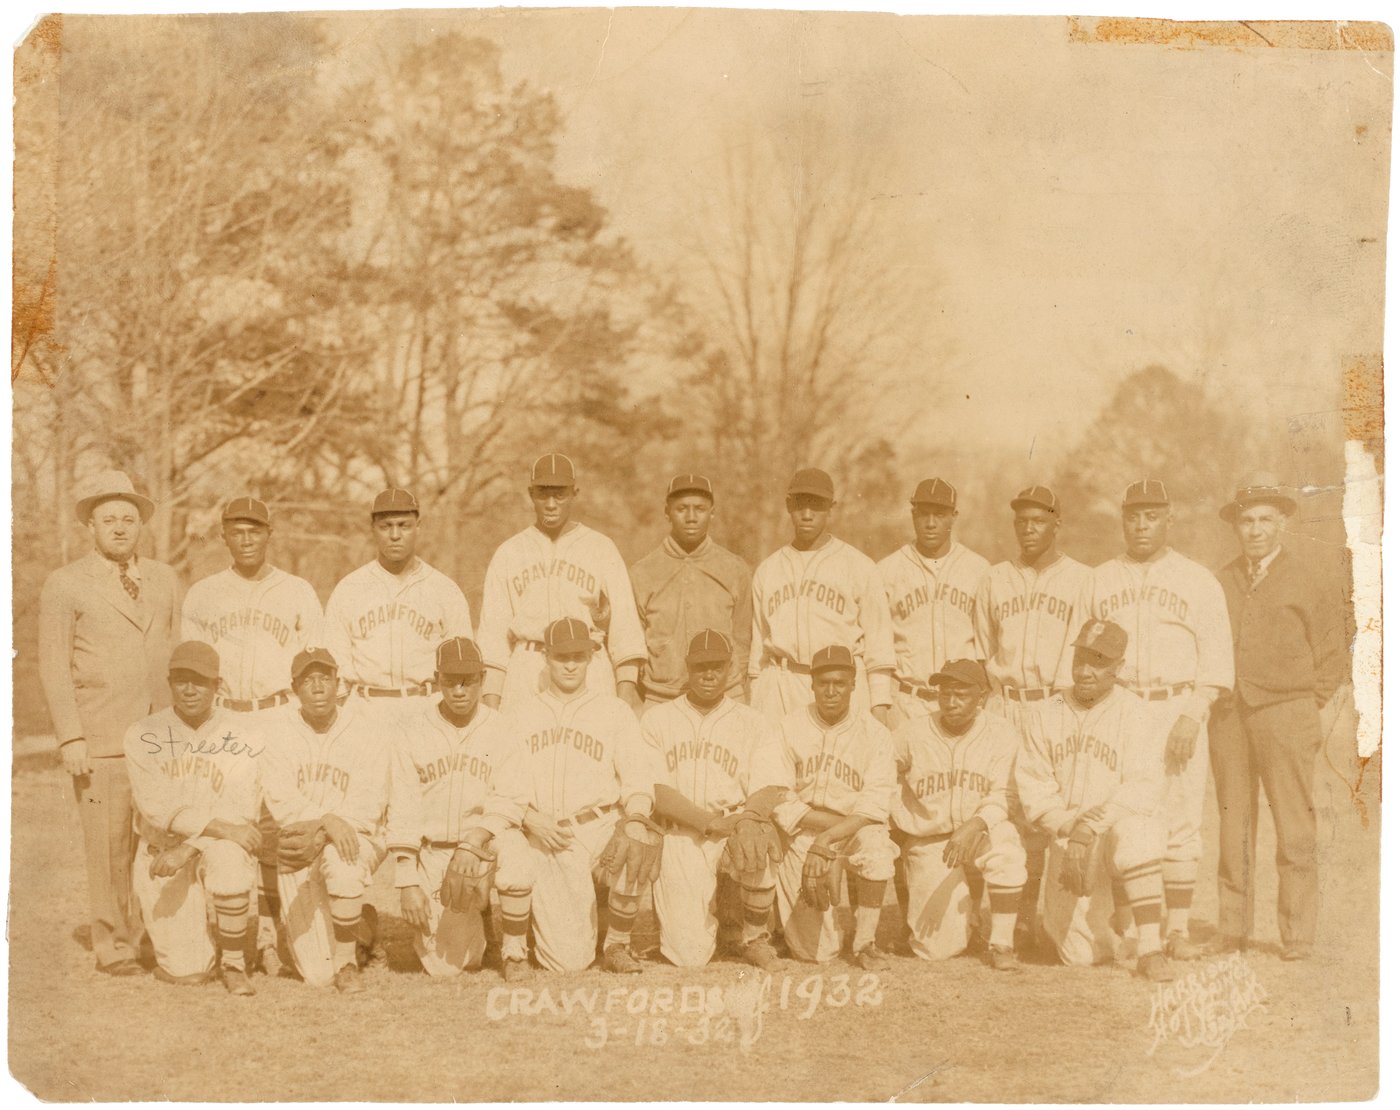 Pittsburgh Crawfords, American baseball team